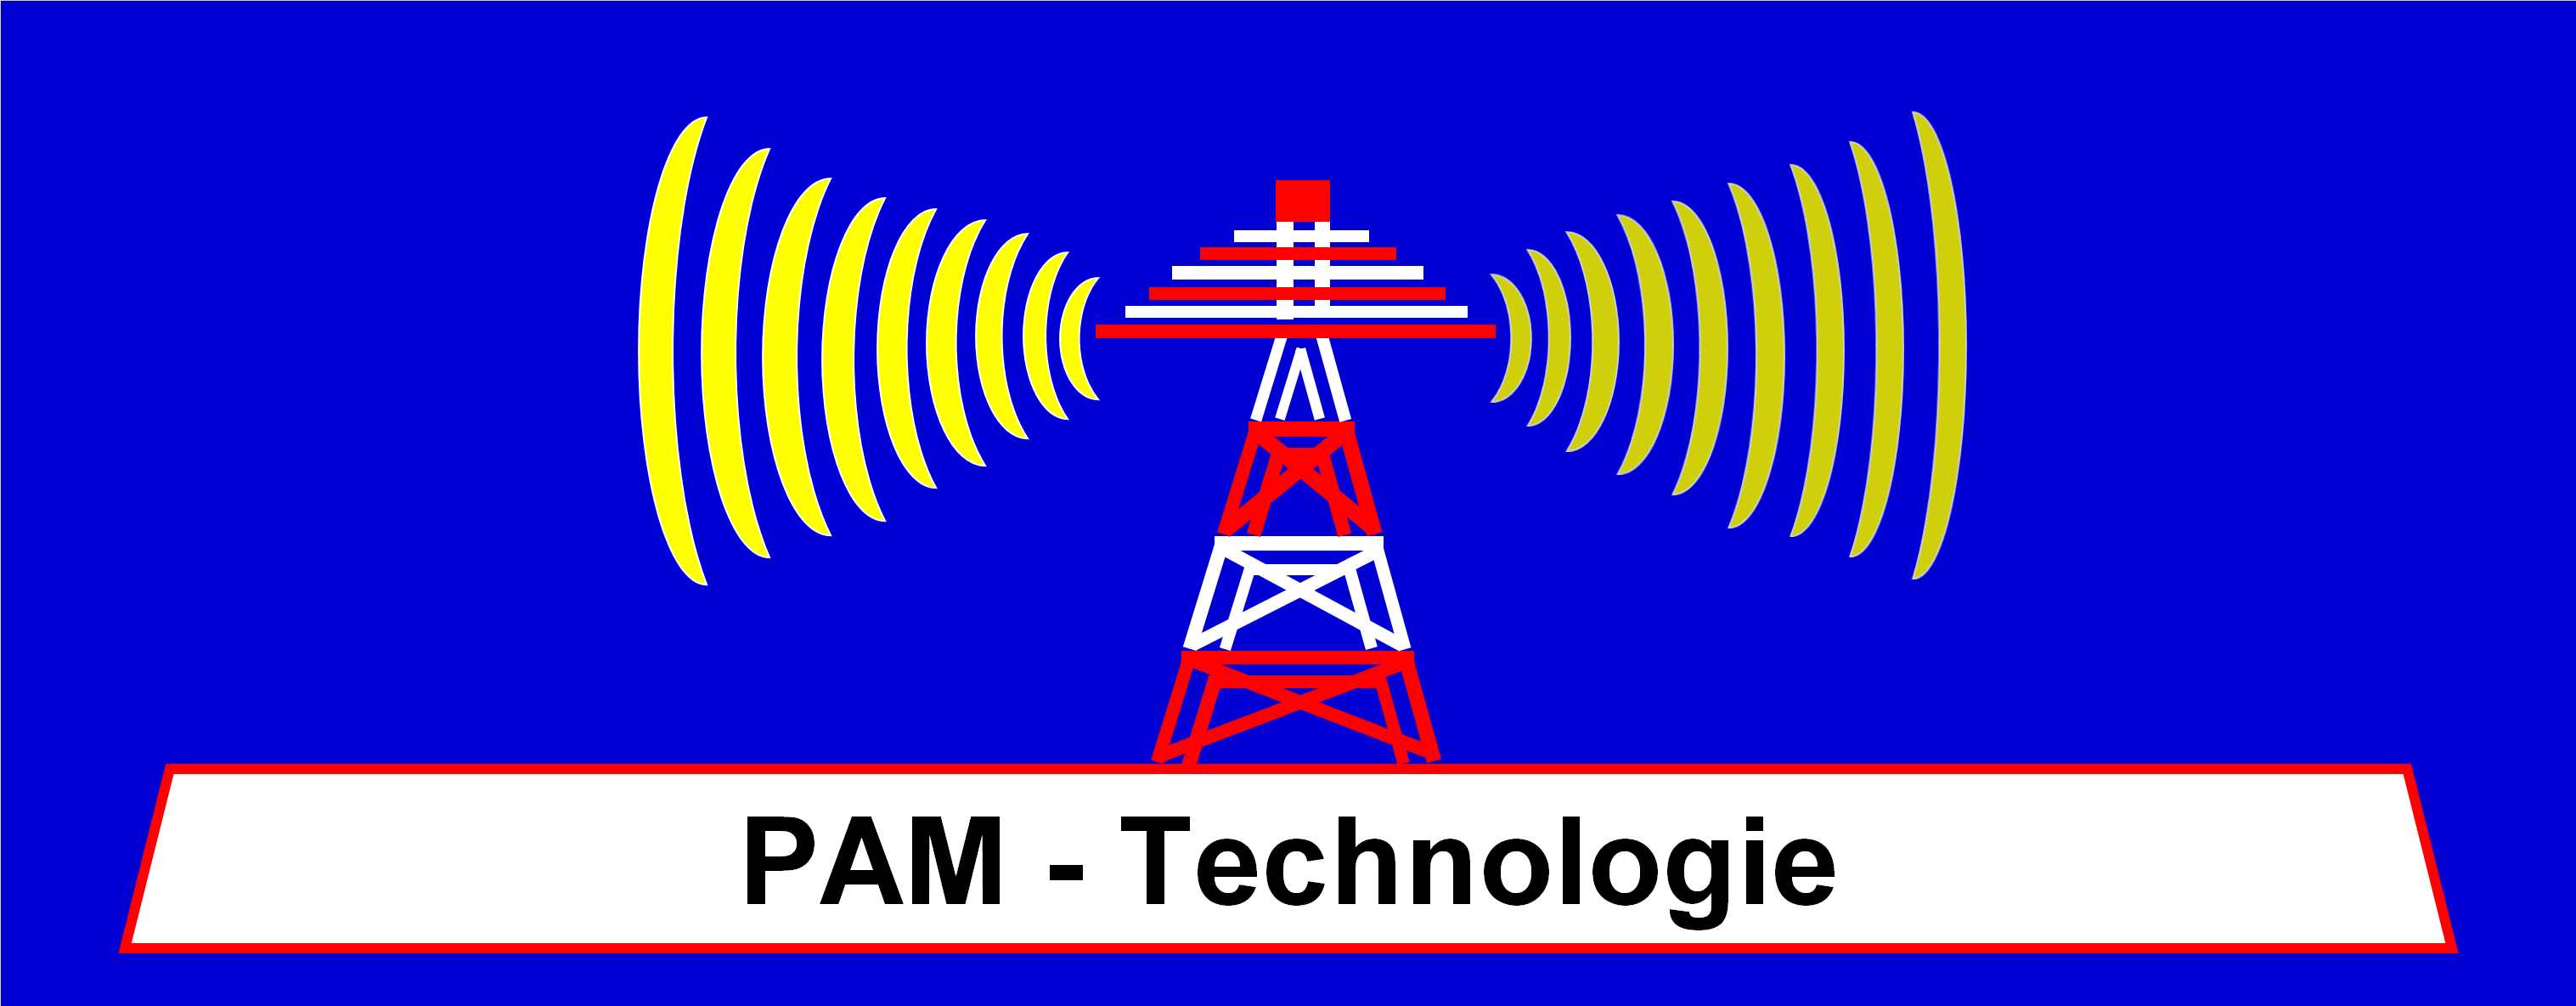 PAM - Technologie